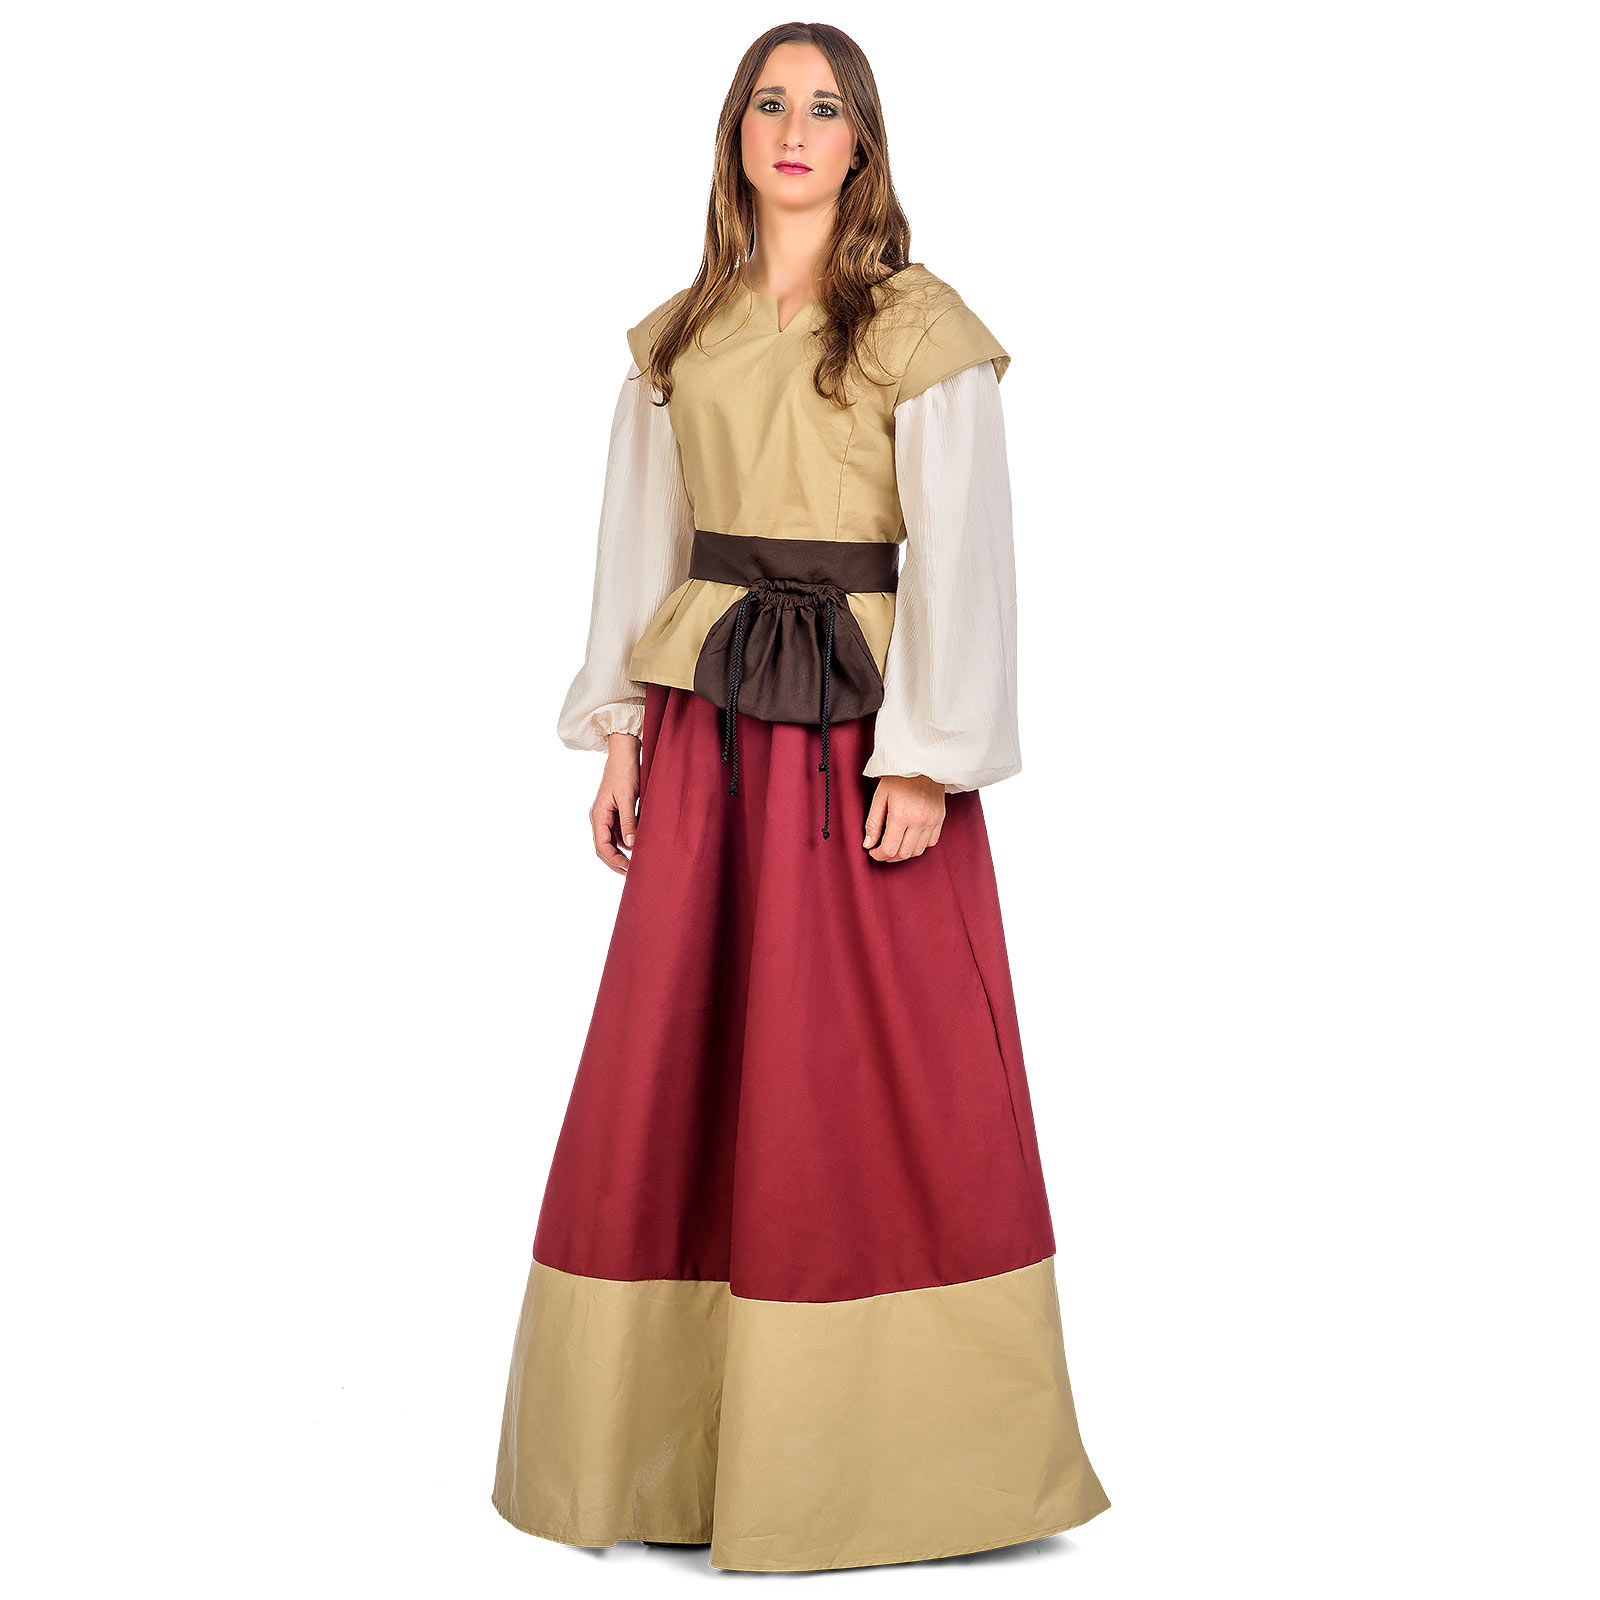 Mittelalter Damen Kostüm Juana beige-rot